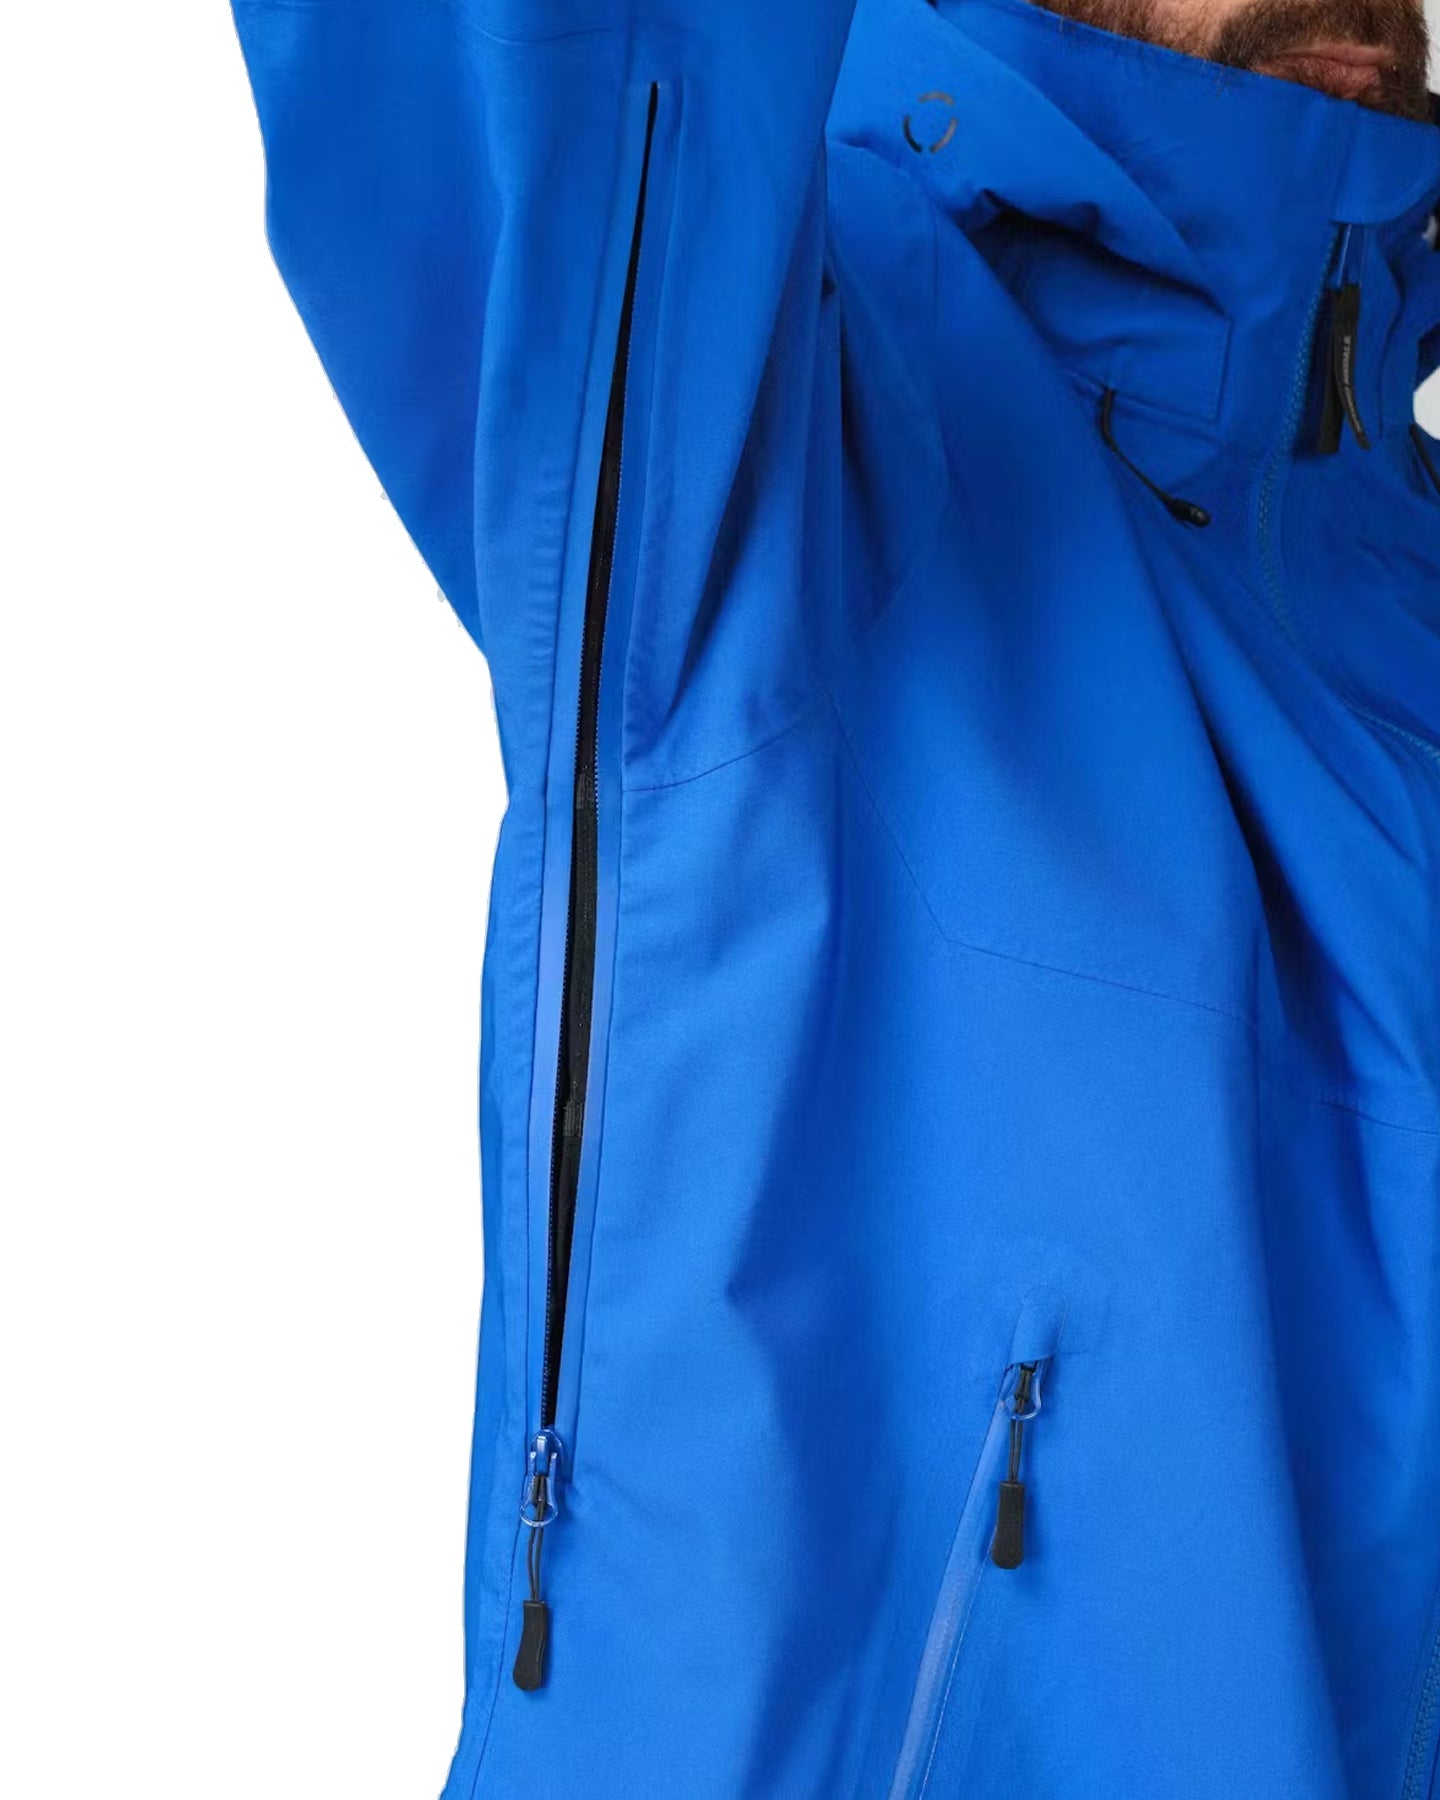 Beyond Medals High Tech 3L Snow Jacket - Blue Ocean Men's Snow Jackets - Trojan Wake Ski Snow